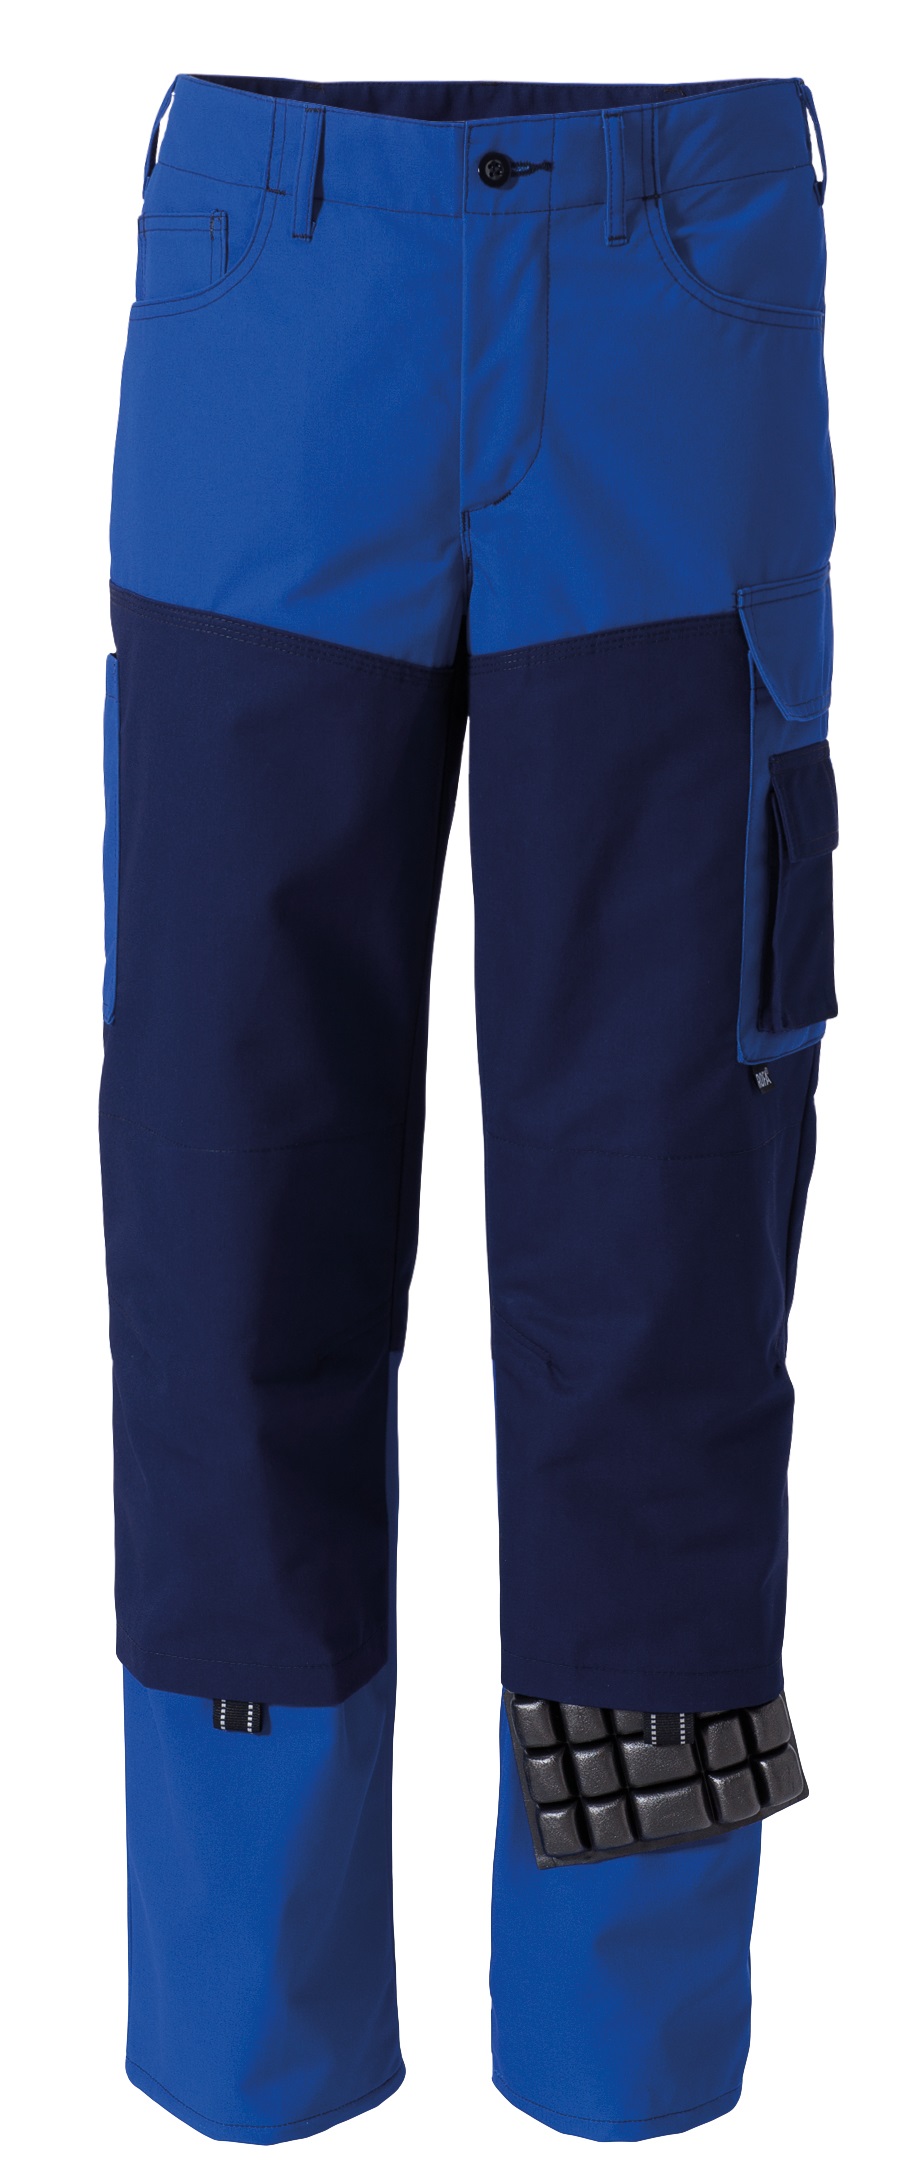 ROFA XTRA Bundhose Arbeitshose Berufshose Workerhose Arbeitskleidung Berufskleidung marine kornblau ca 250 g